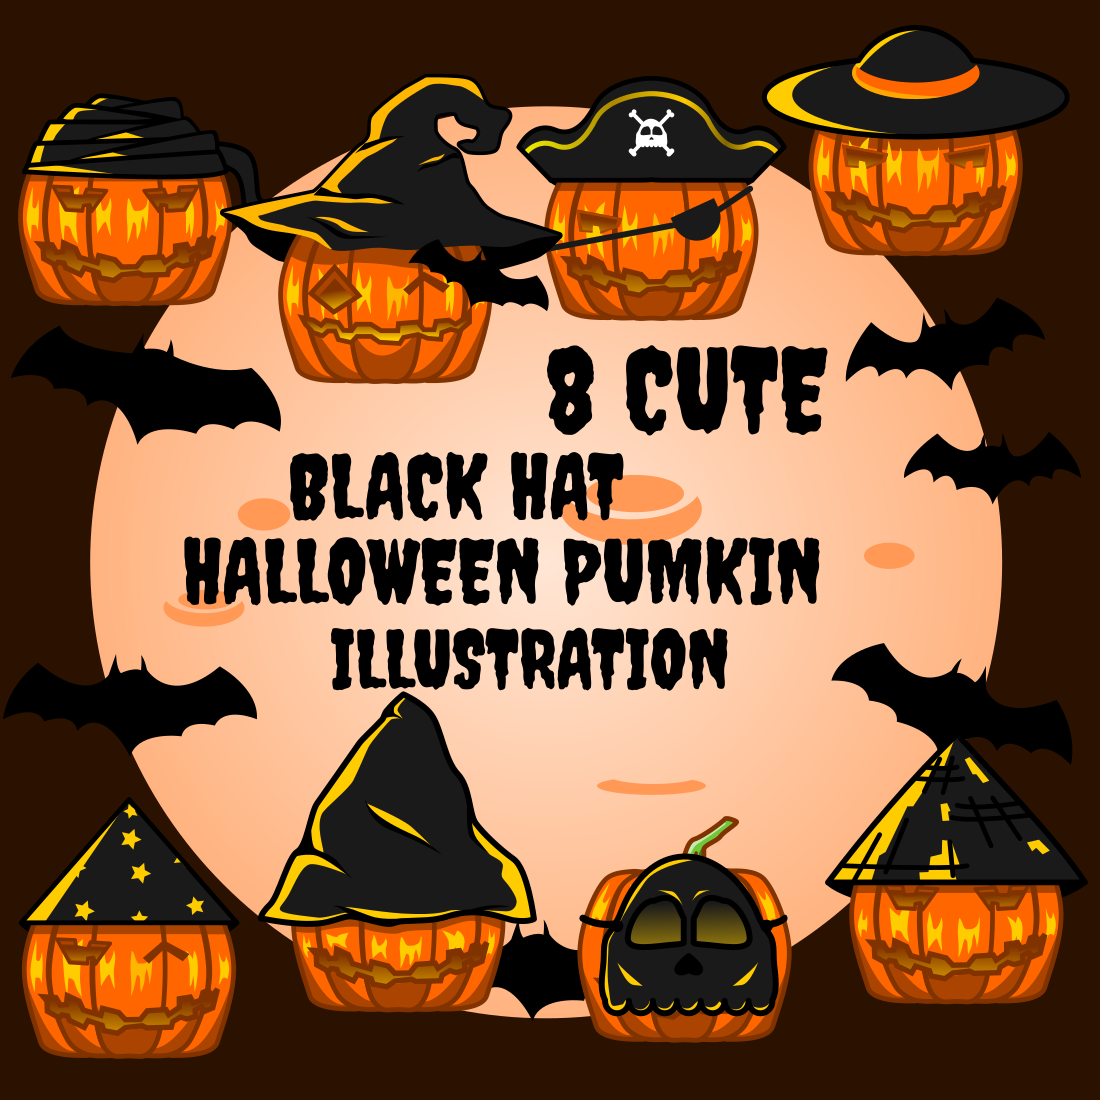 Perfect illustrations in the dark Halloween theme.